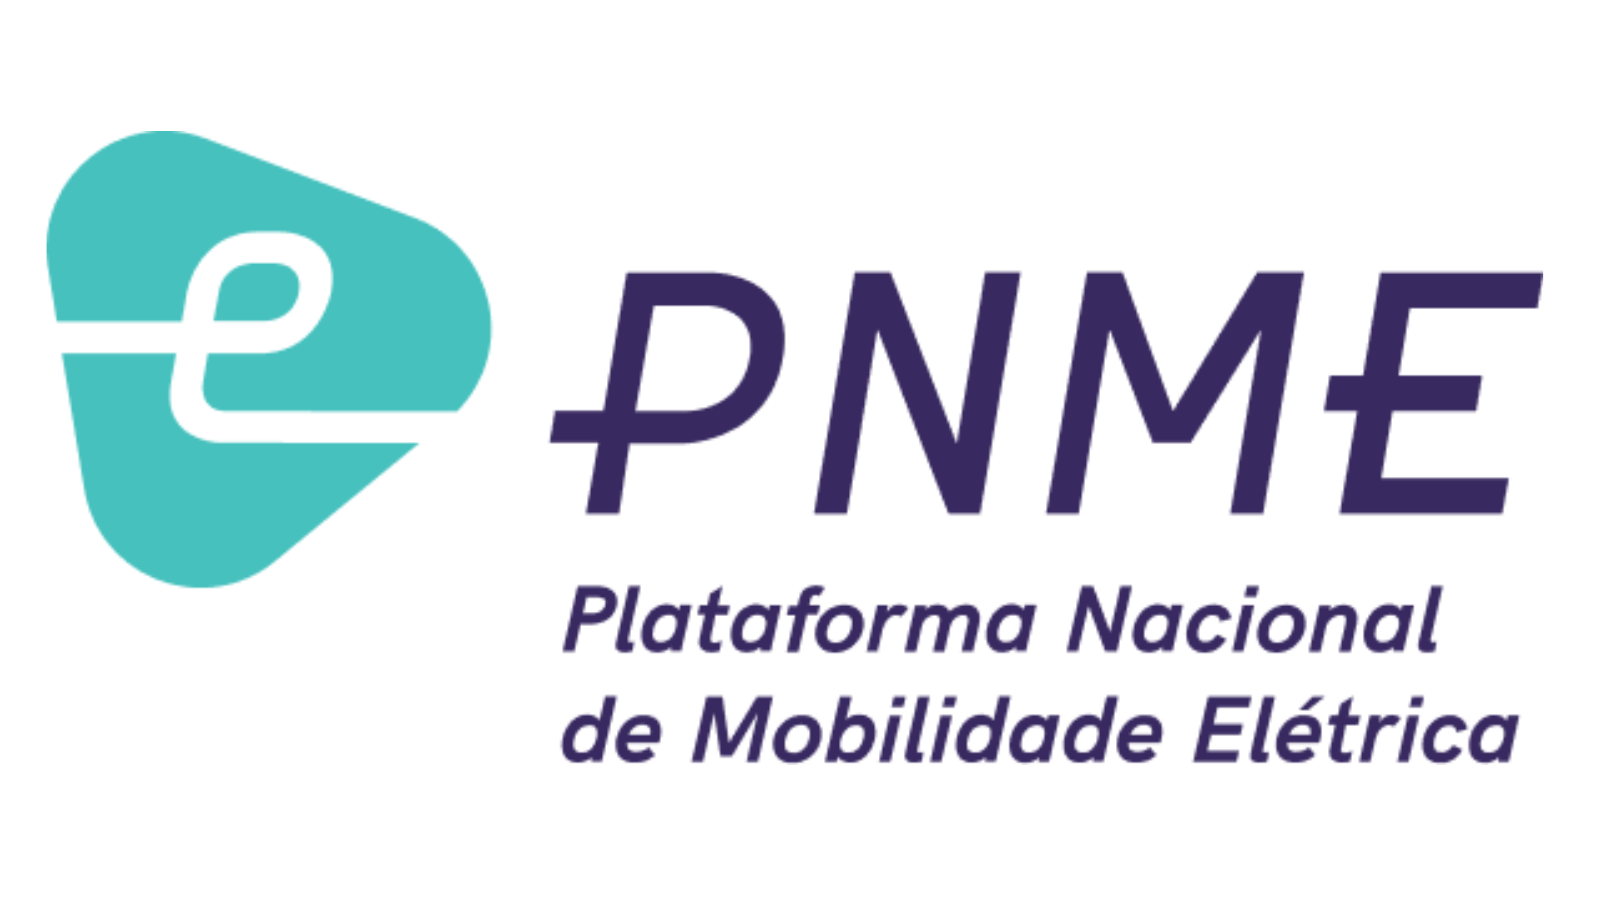 Electric mobility platform (PNME)